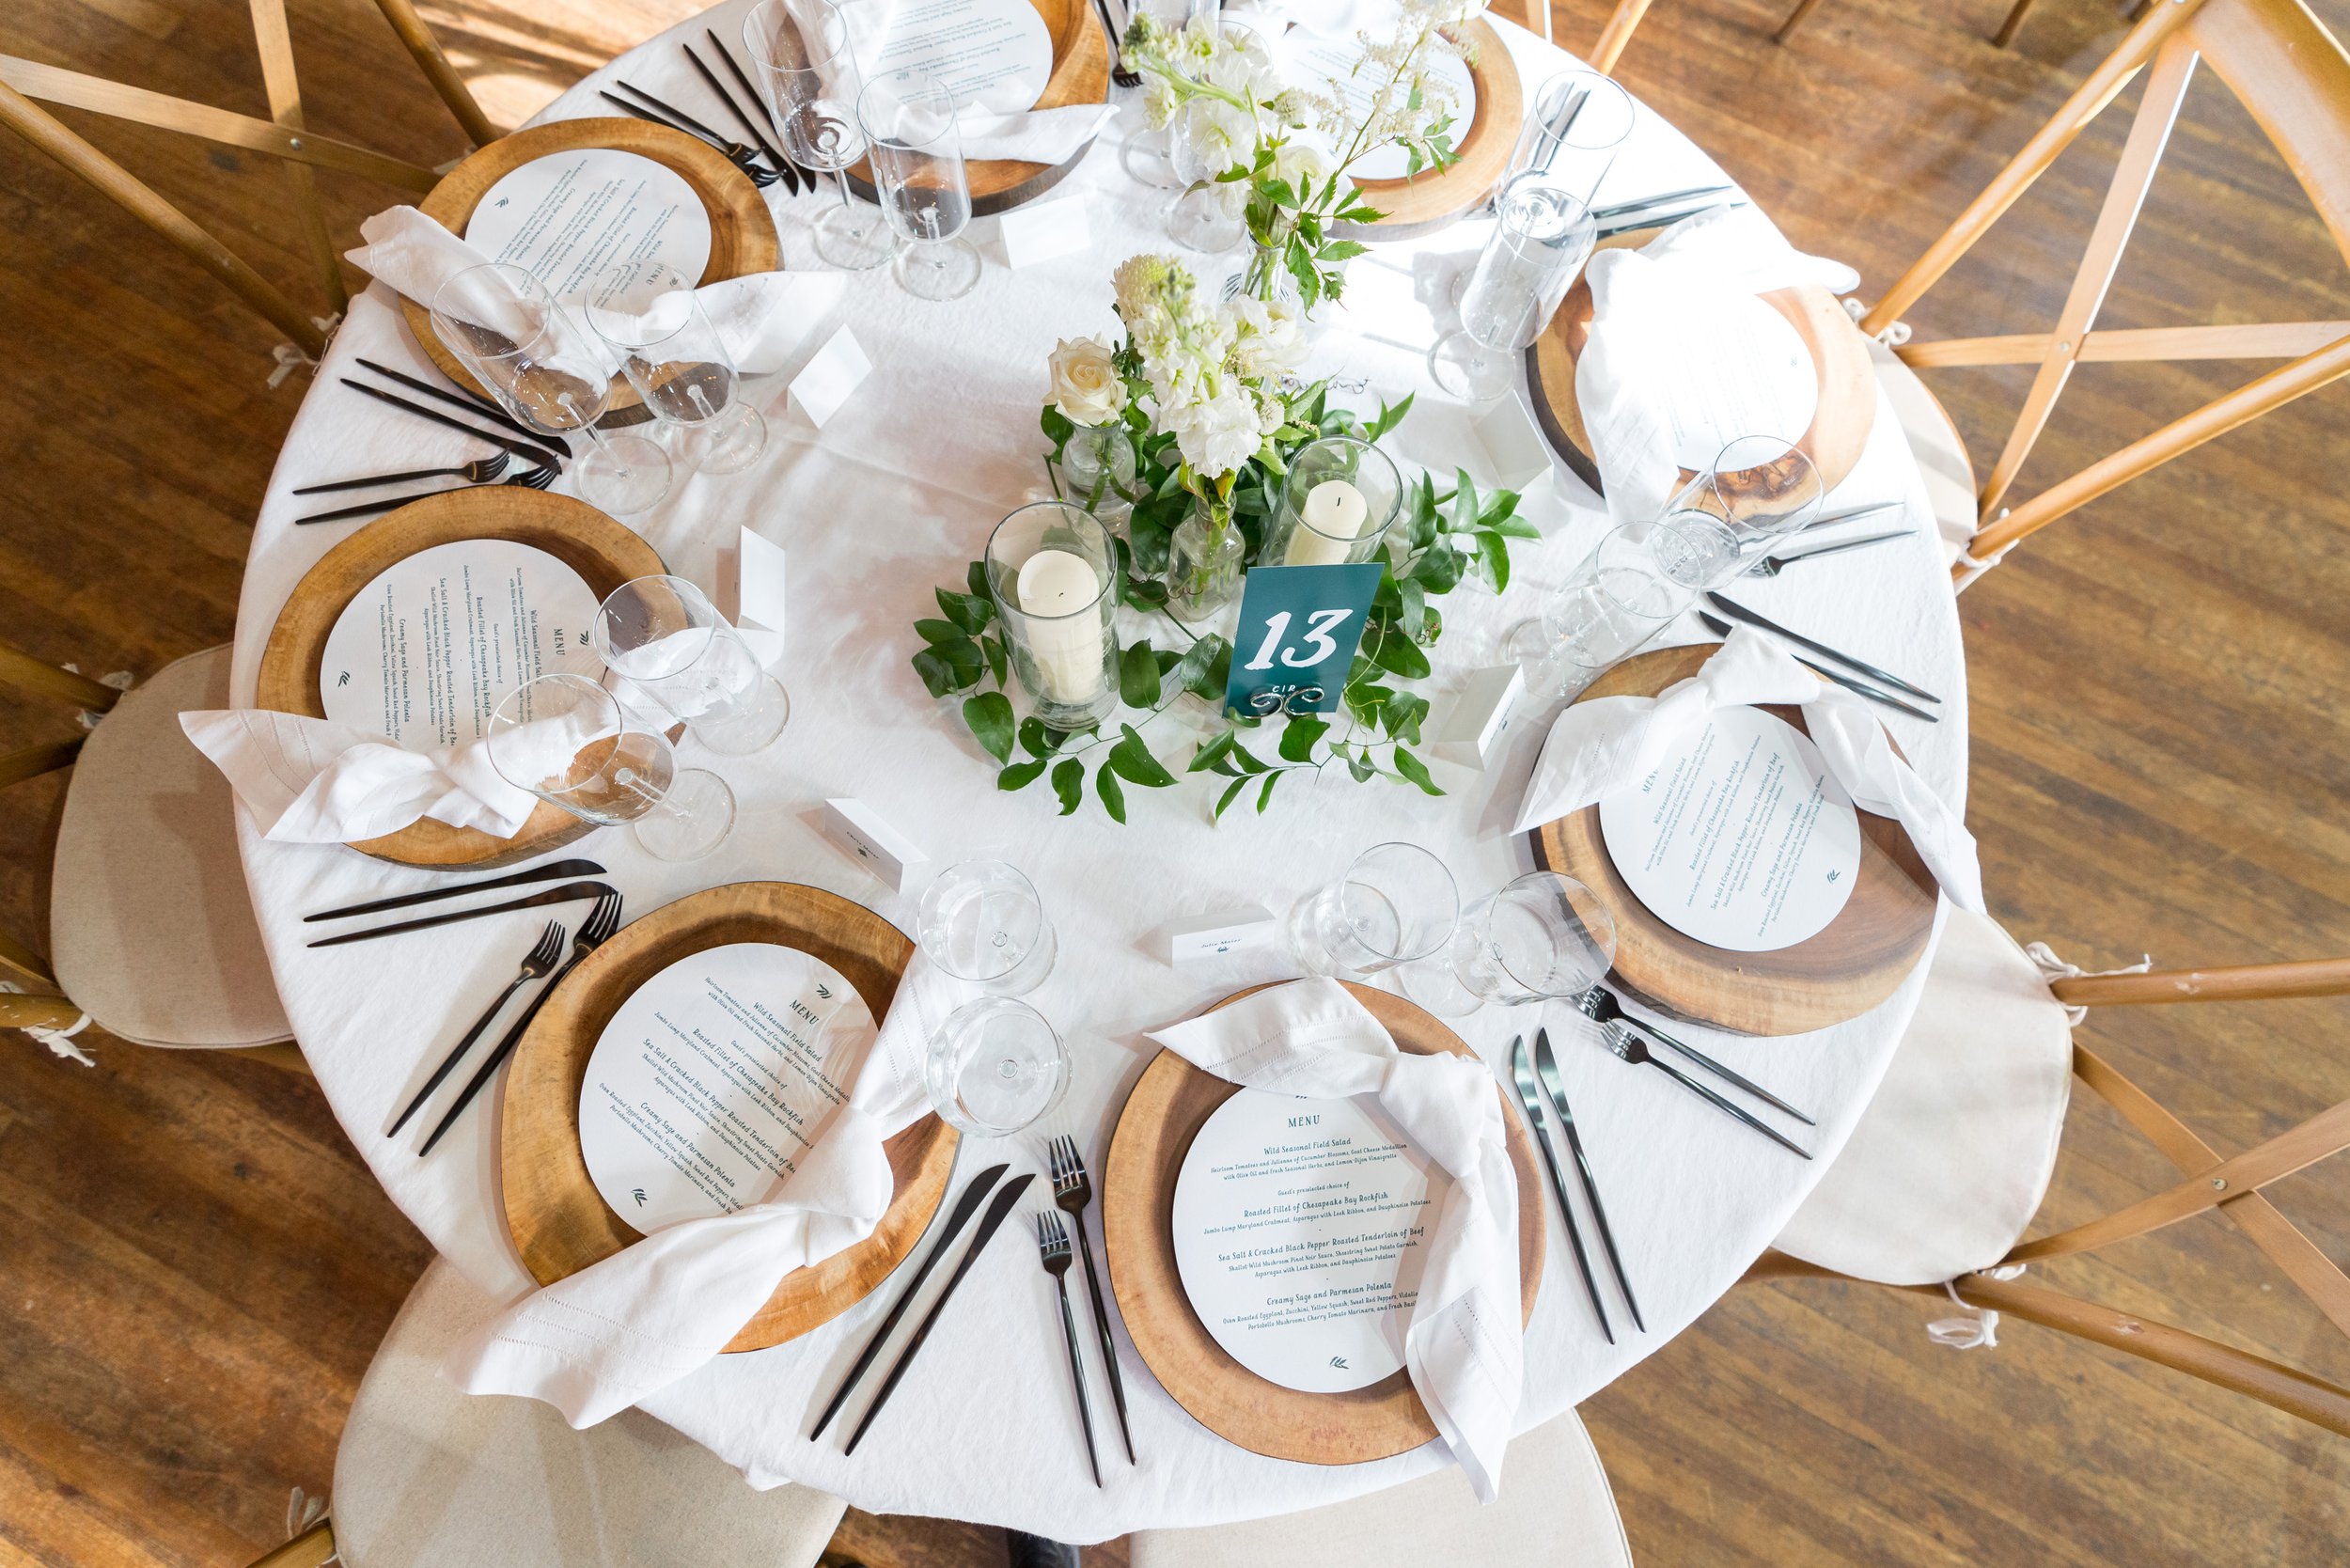 Rustic glamorous farm table setting at Sherwood Forest Club wedding